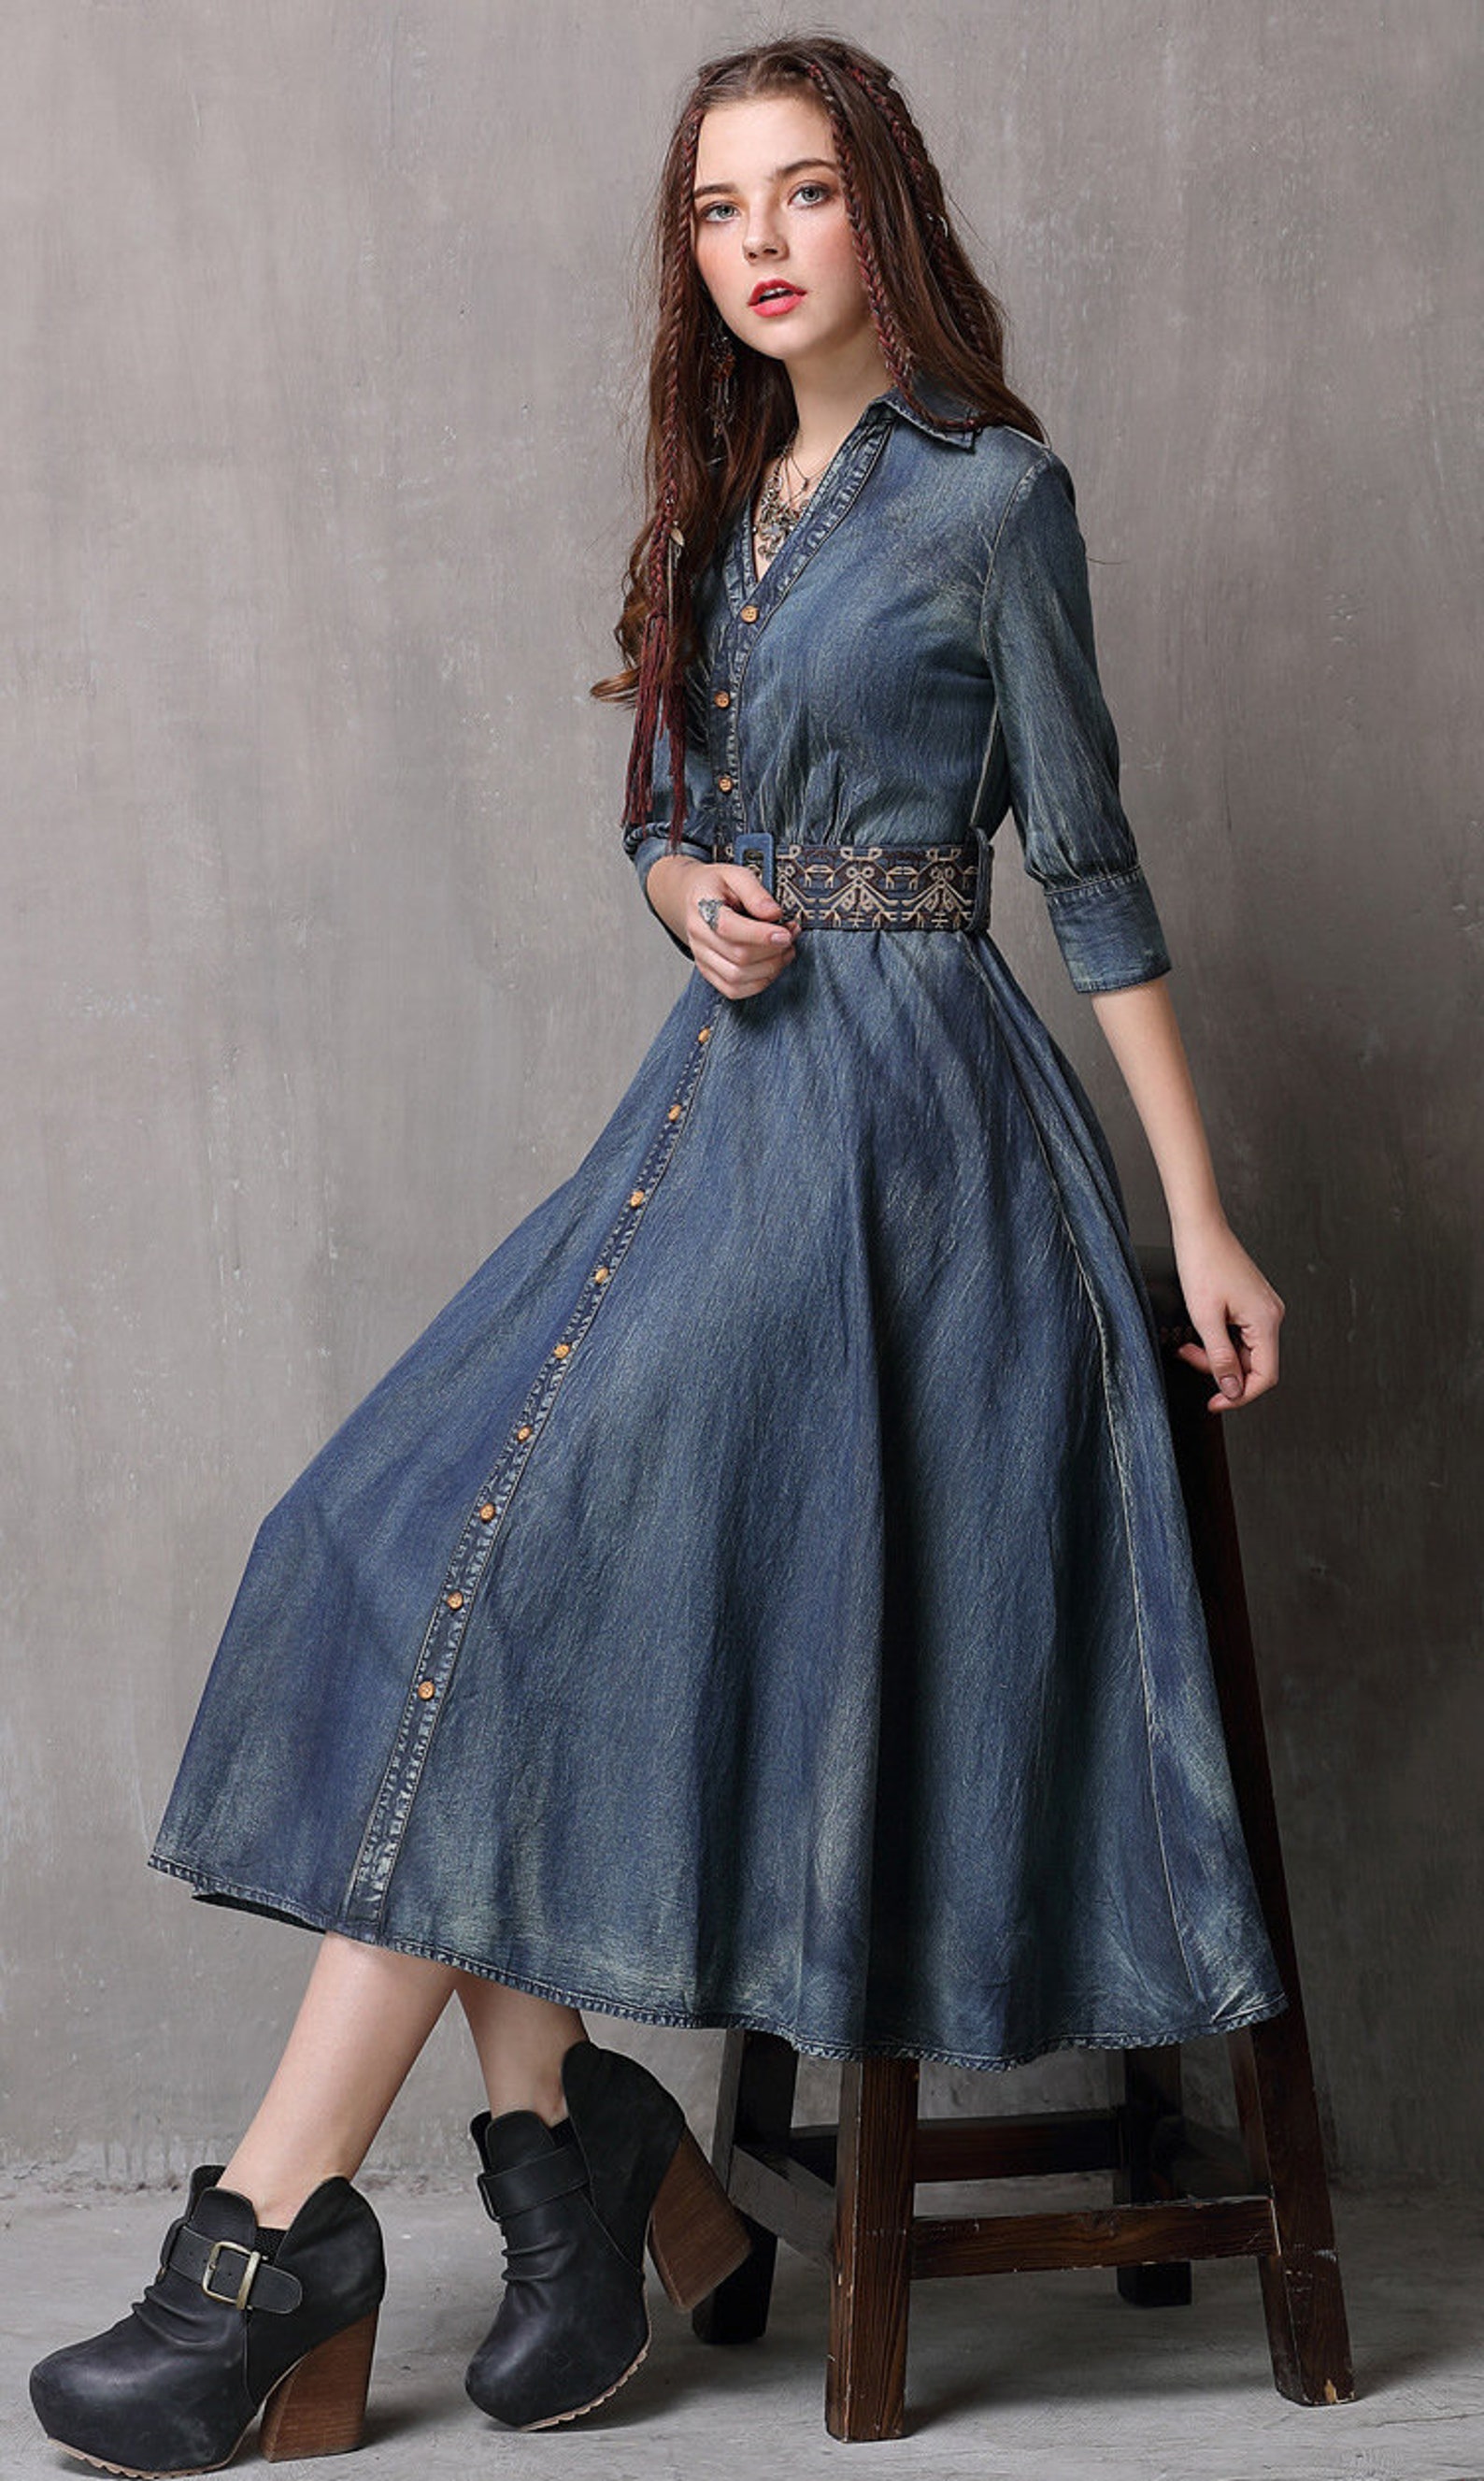 Blue Vintage Long Sleeve Denim Embroidery Dress Plus Size - Etsy